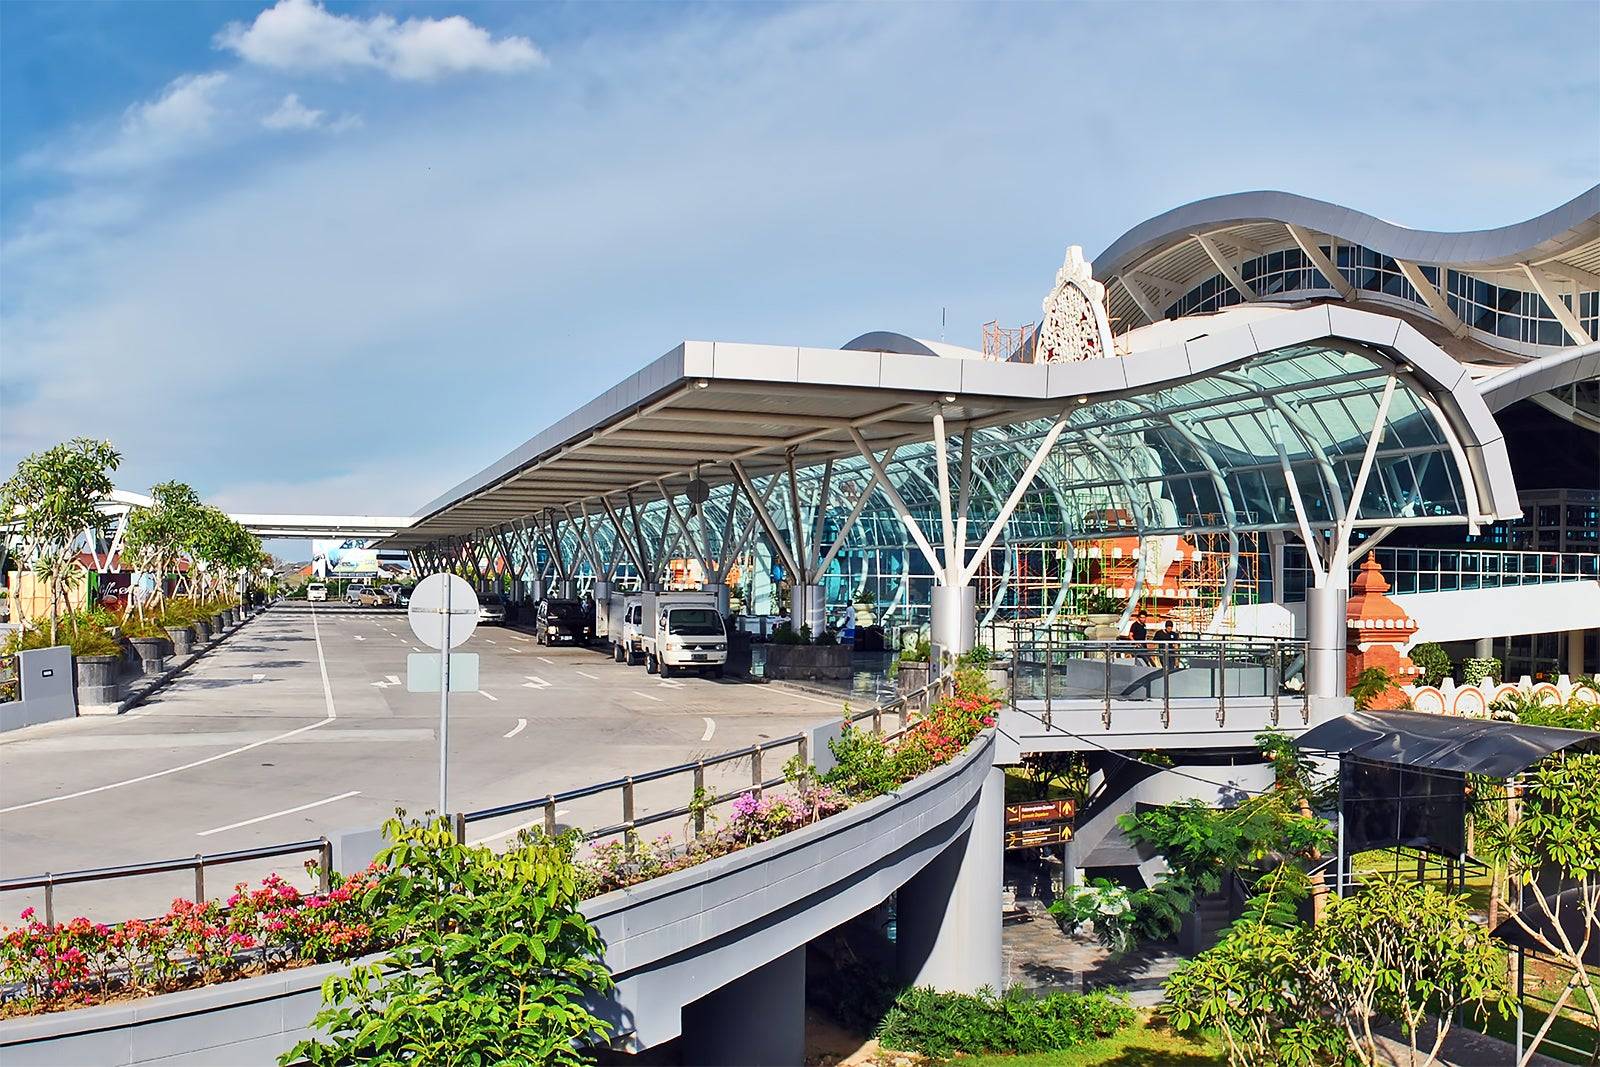 Аэропорт бали в индонезии: название, какой аэропорт